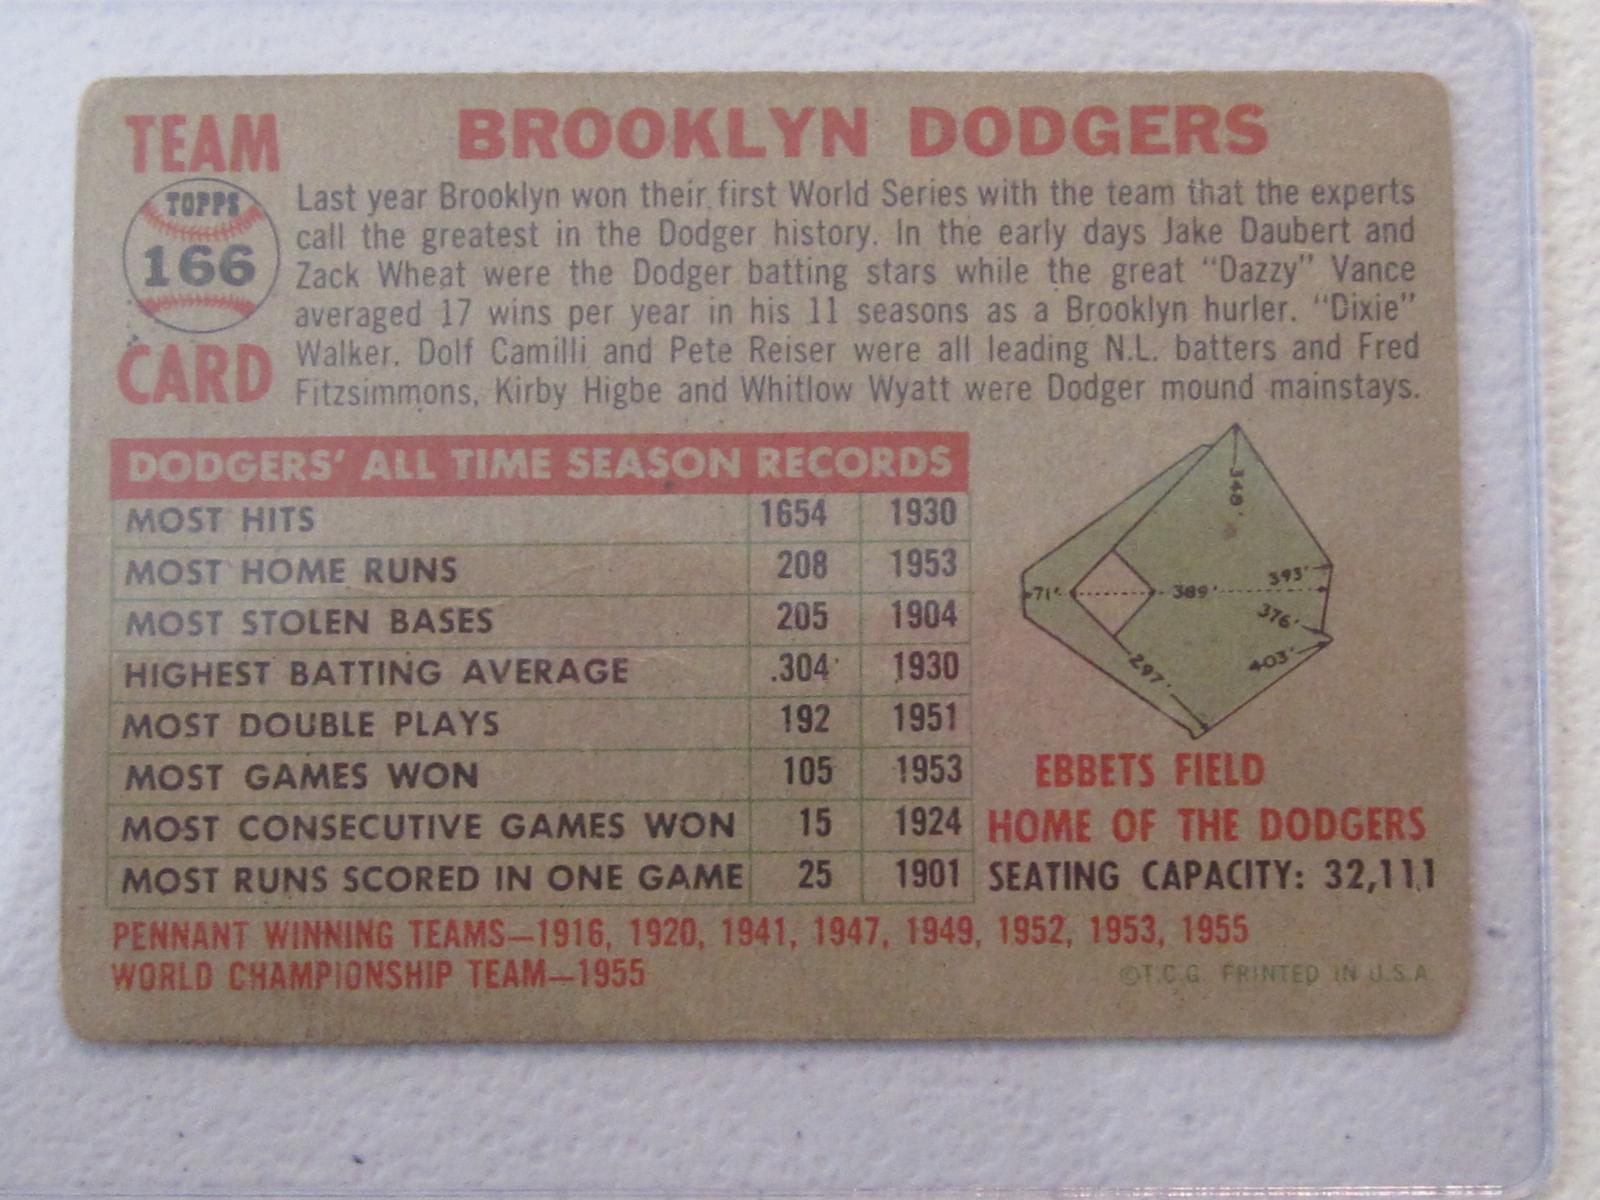 1956 TOPPS BROOKLYN DODGERS TEAM CARD NO.166